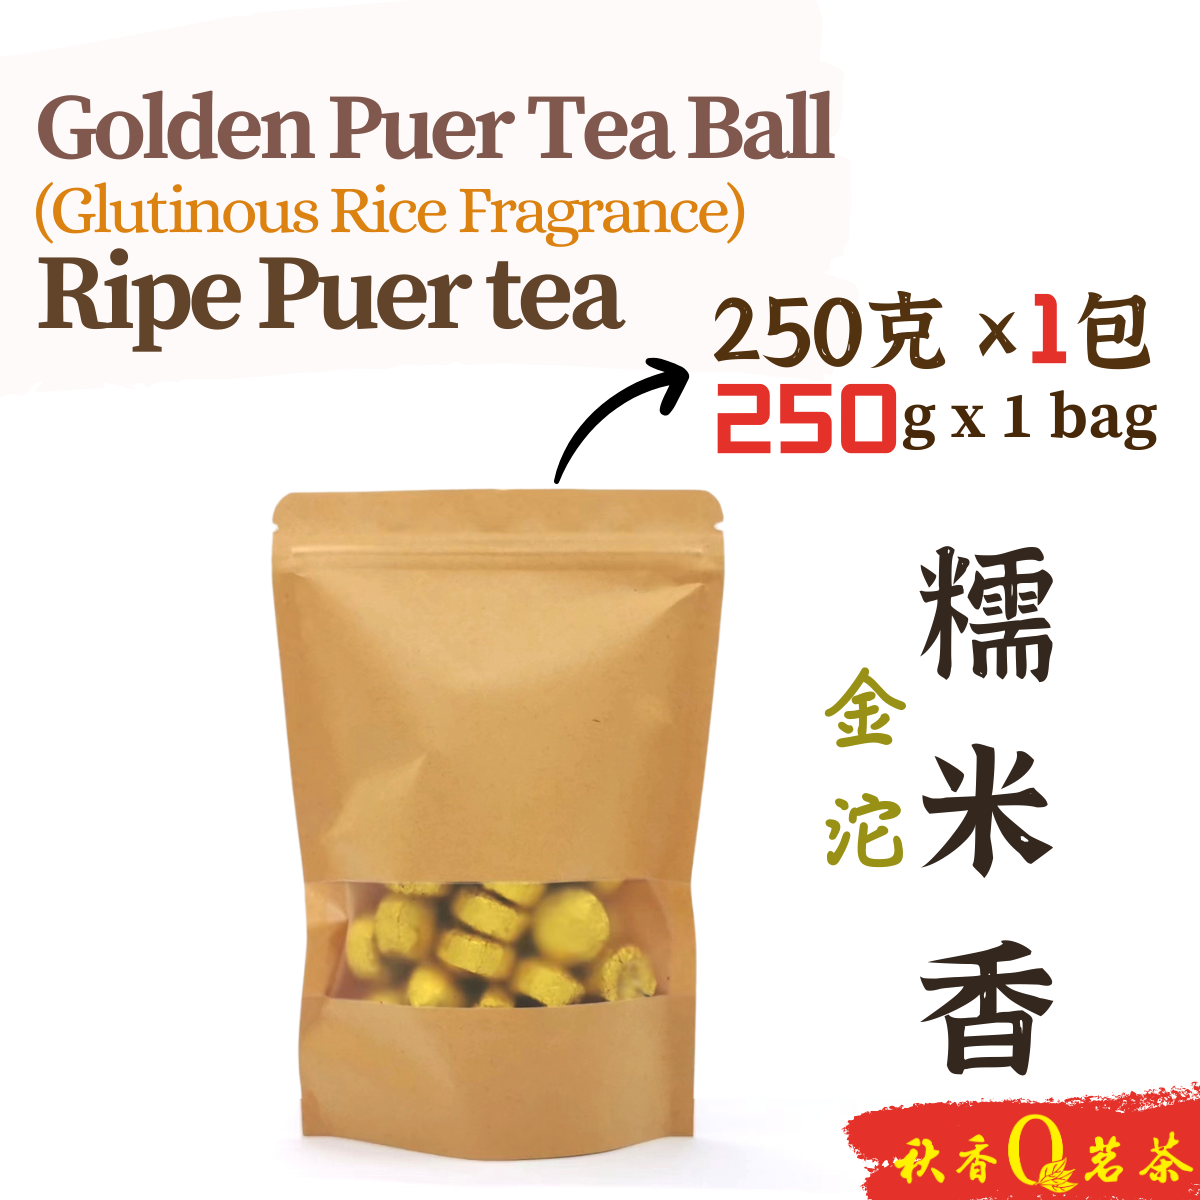 普洱茶 糯米香金沱 Golden Puer Tea Ball (High Glutinous Rice Fragrance)【250g】|【调配茶 Blended tea】